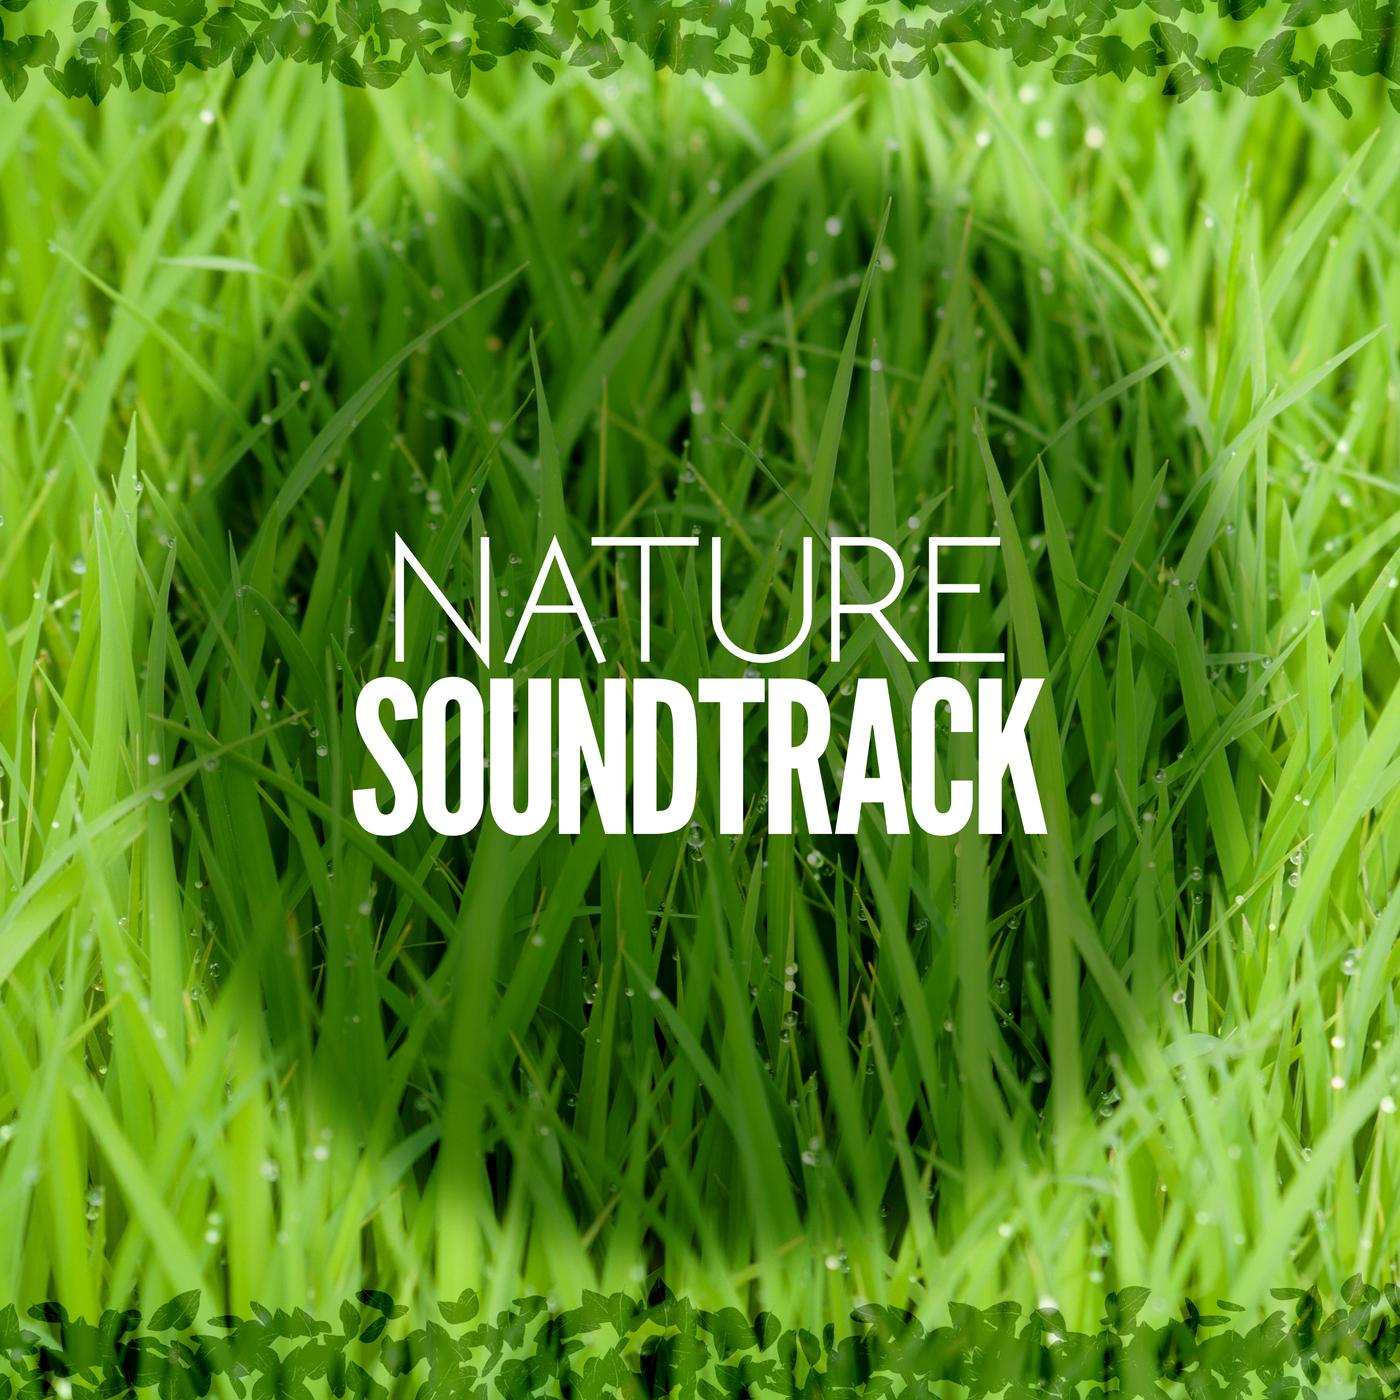 Nature Soundtrack